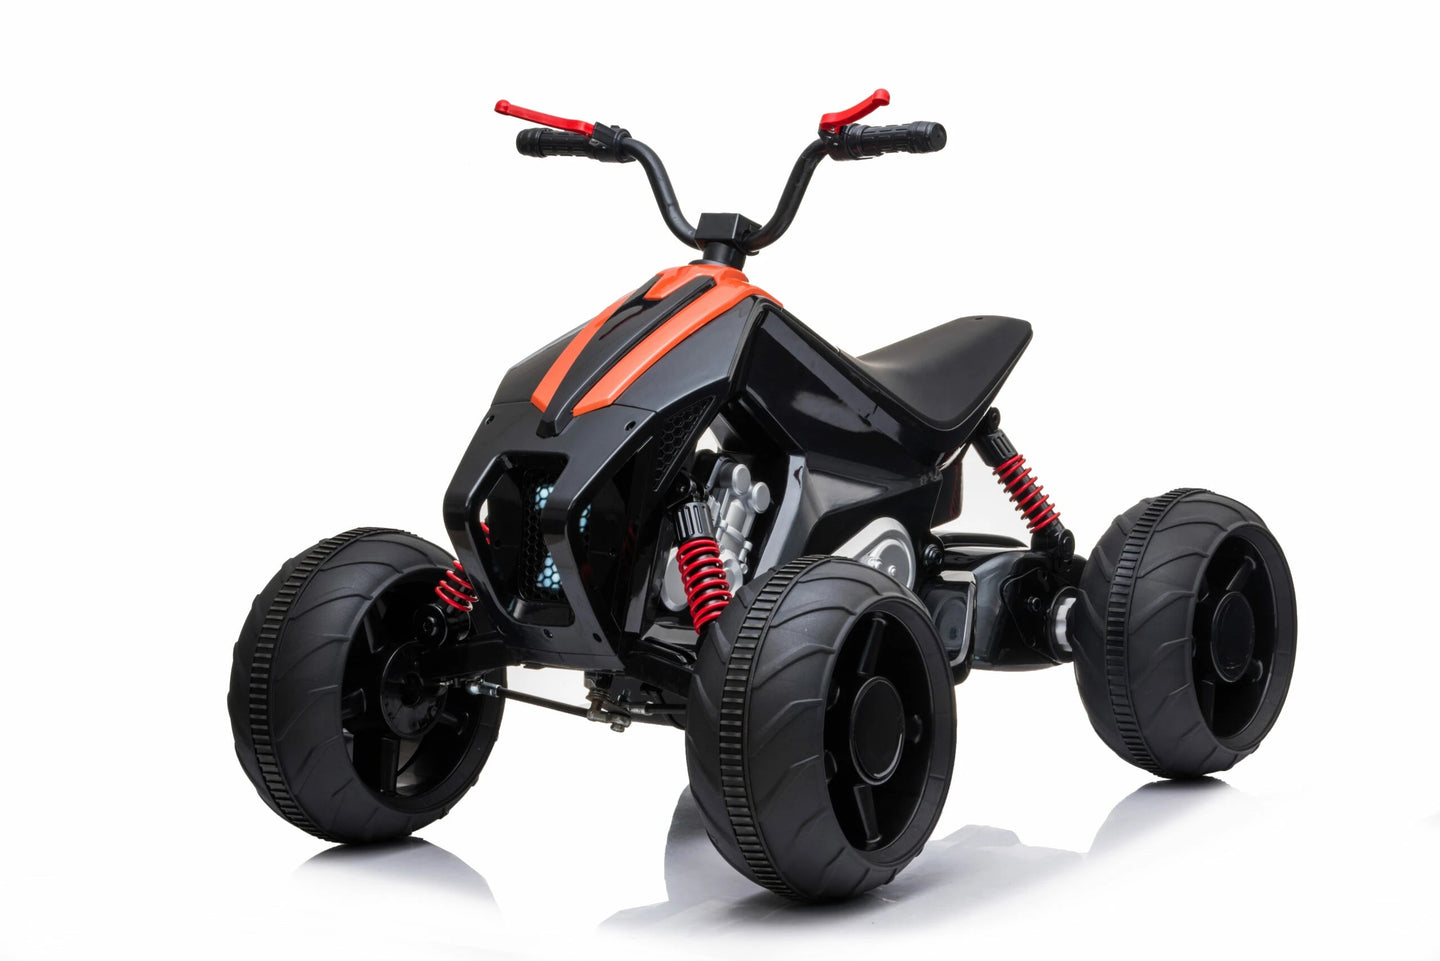 Upgraded 24V ATV Ride On Car | Upgraded Motors | Leather Seat | Rubber Wheels | LED Lights